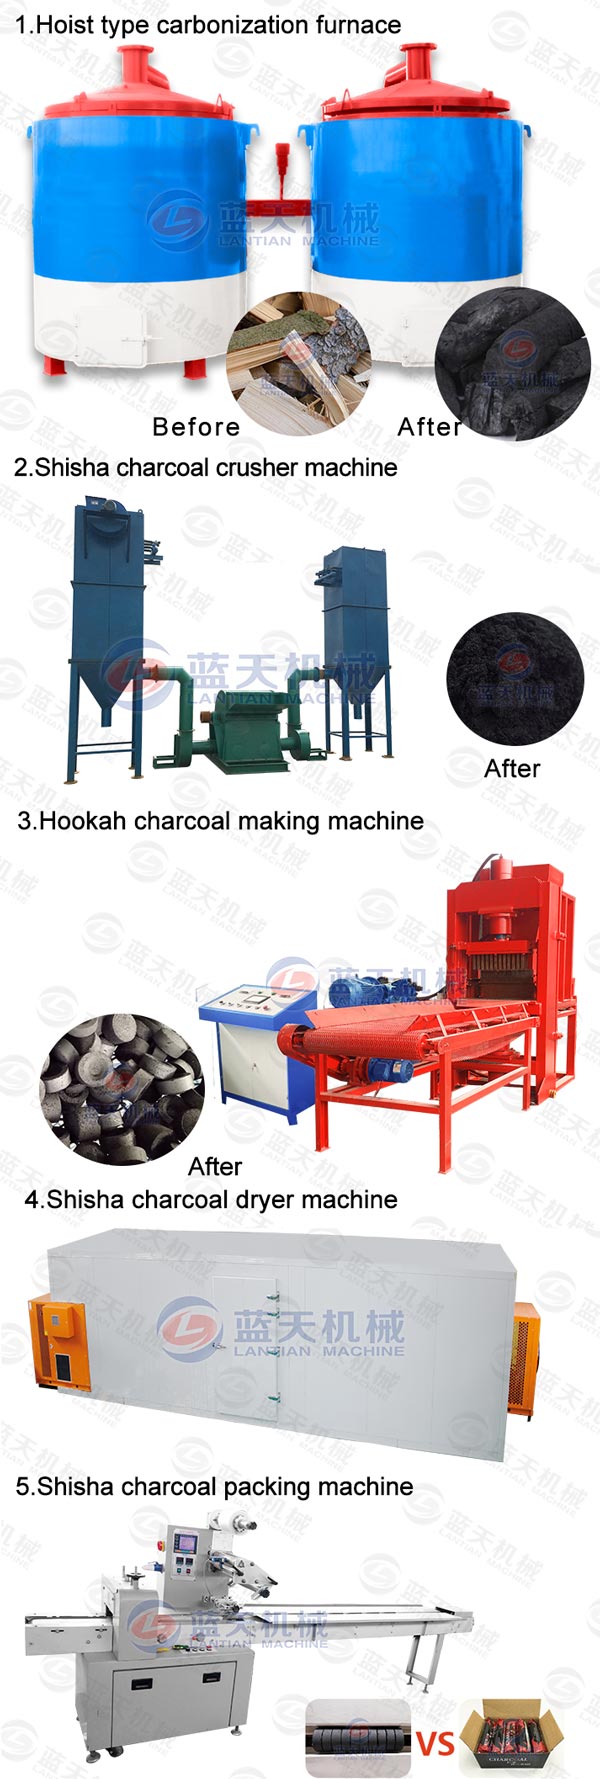 Product line of hoisting carbonization furnace